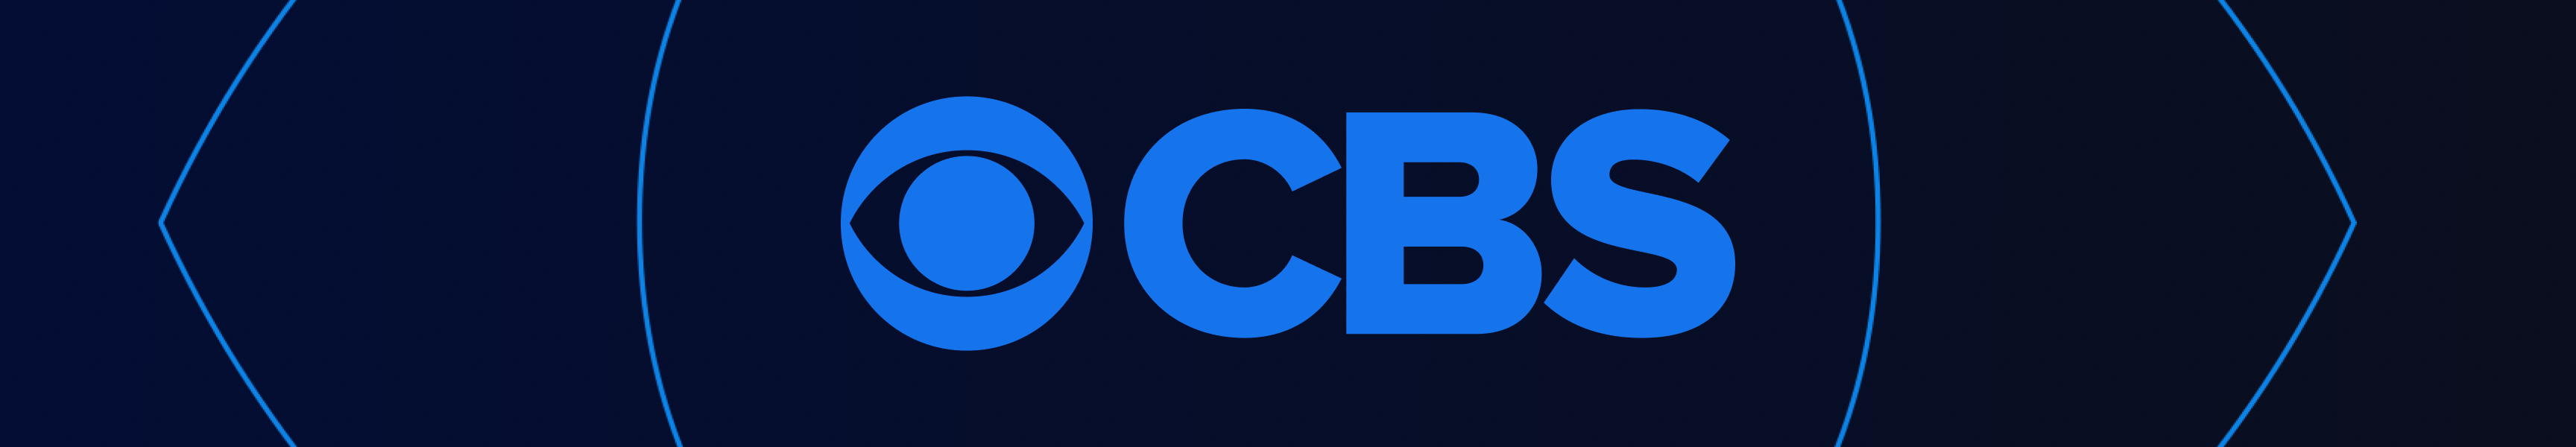 CBS Unterhaltung Neuankömmlinge